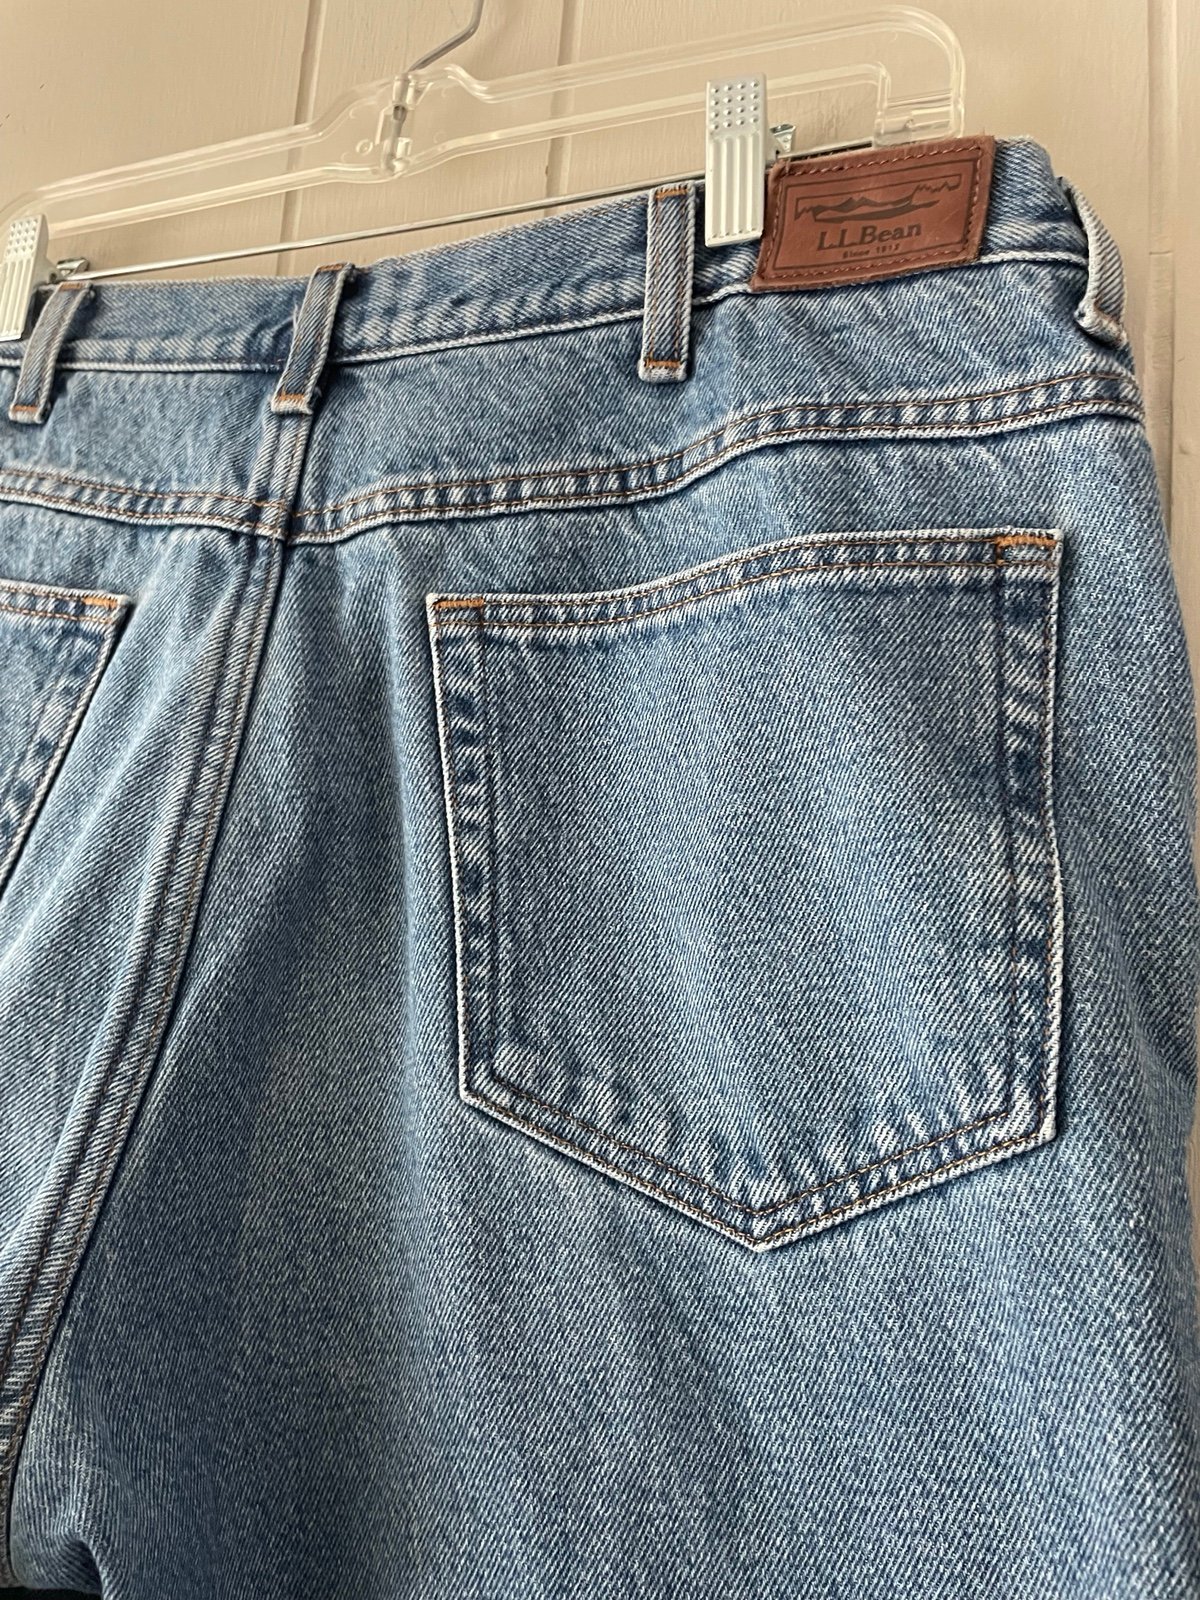 Elegant Vintage Classic Fit L.L. Bean Fleece Lined Jeans kuJSToLZ4 Counter Genuine 